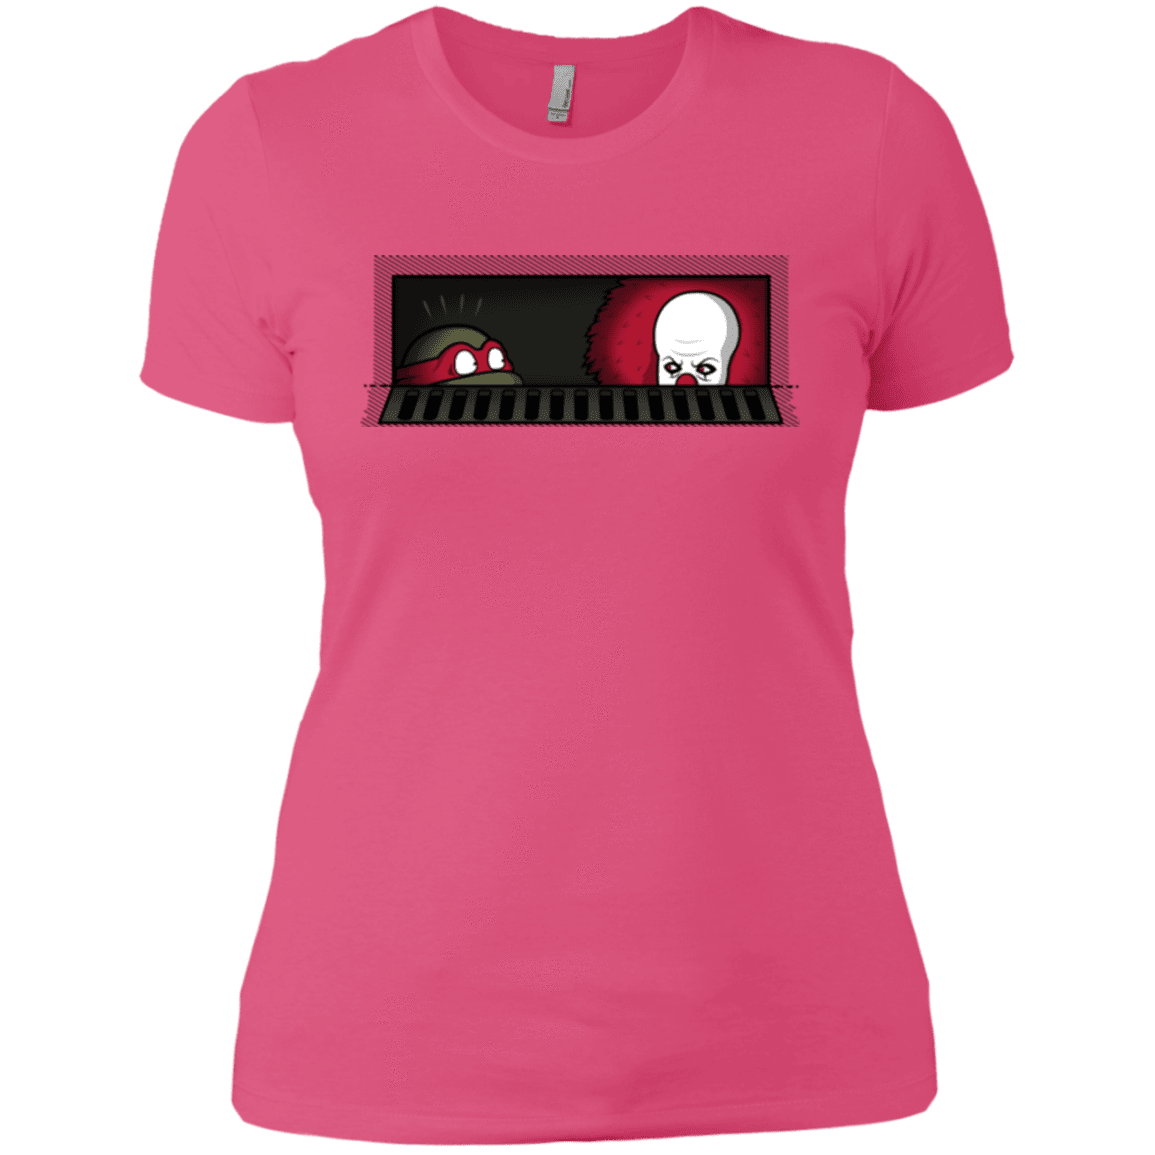 T-Shirts Hot Pink / X-Small Sewermates Women's Premium T-Shirt